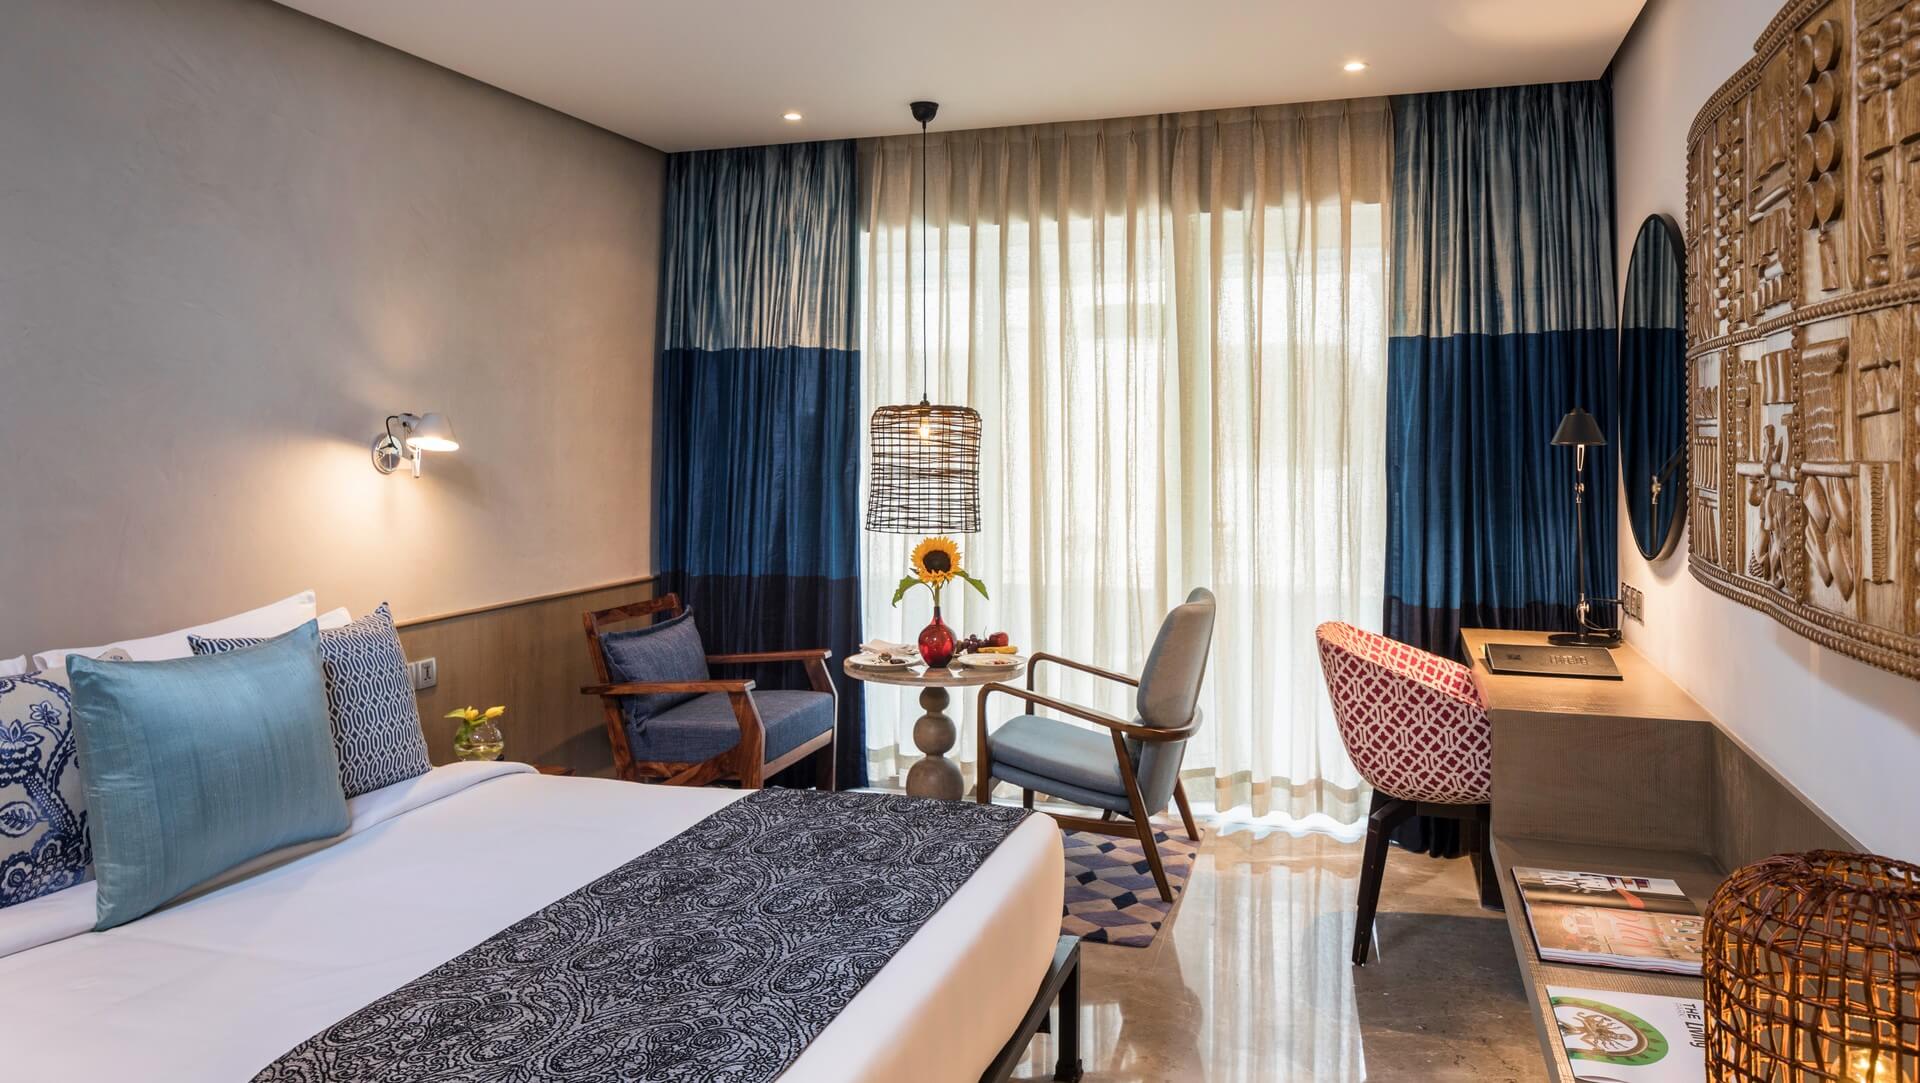 Premium Hotel Rooms in Bangalore - Comfort Inn Insys Hotel Bangalore